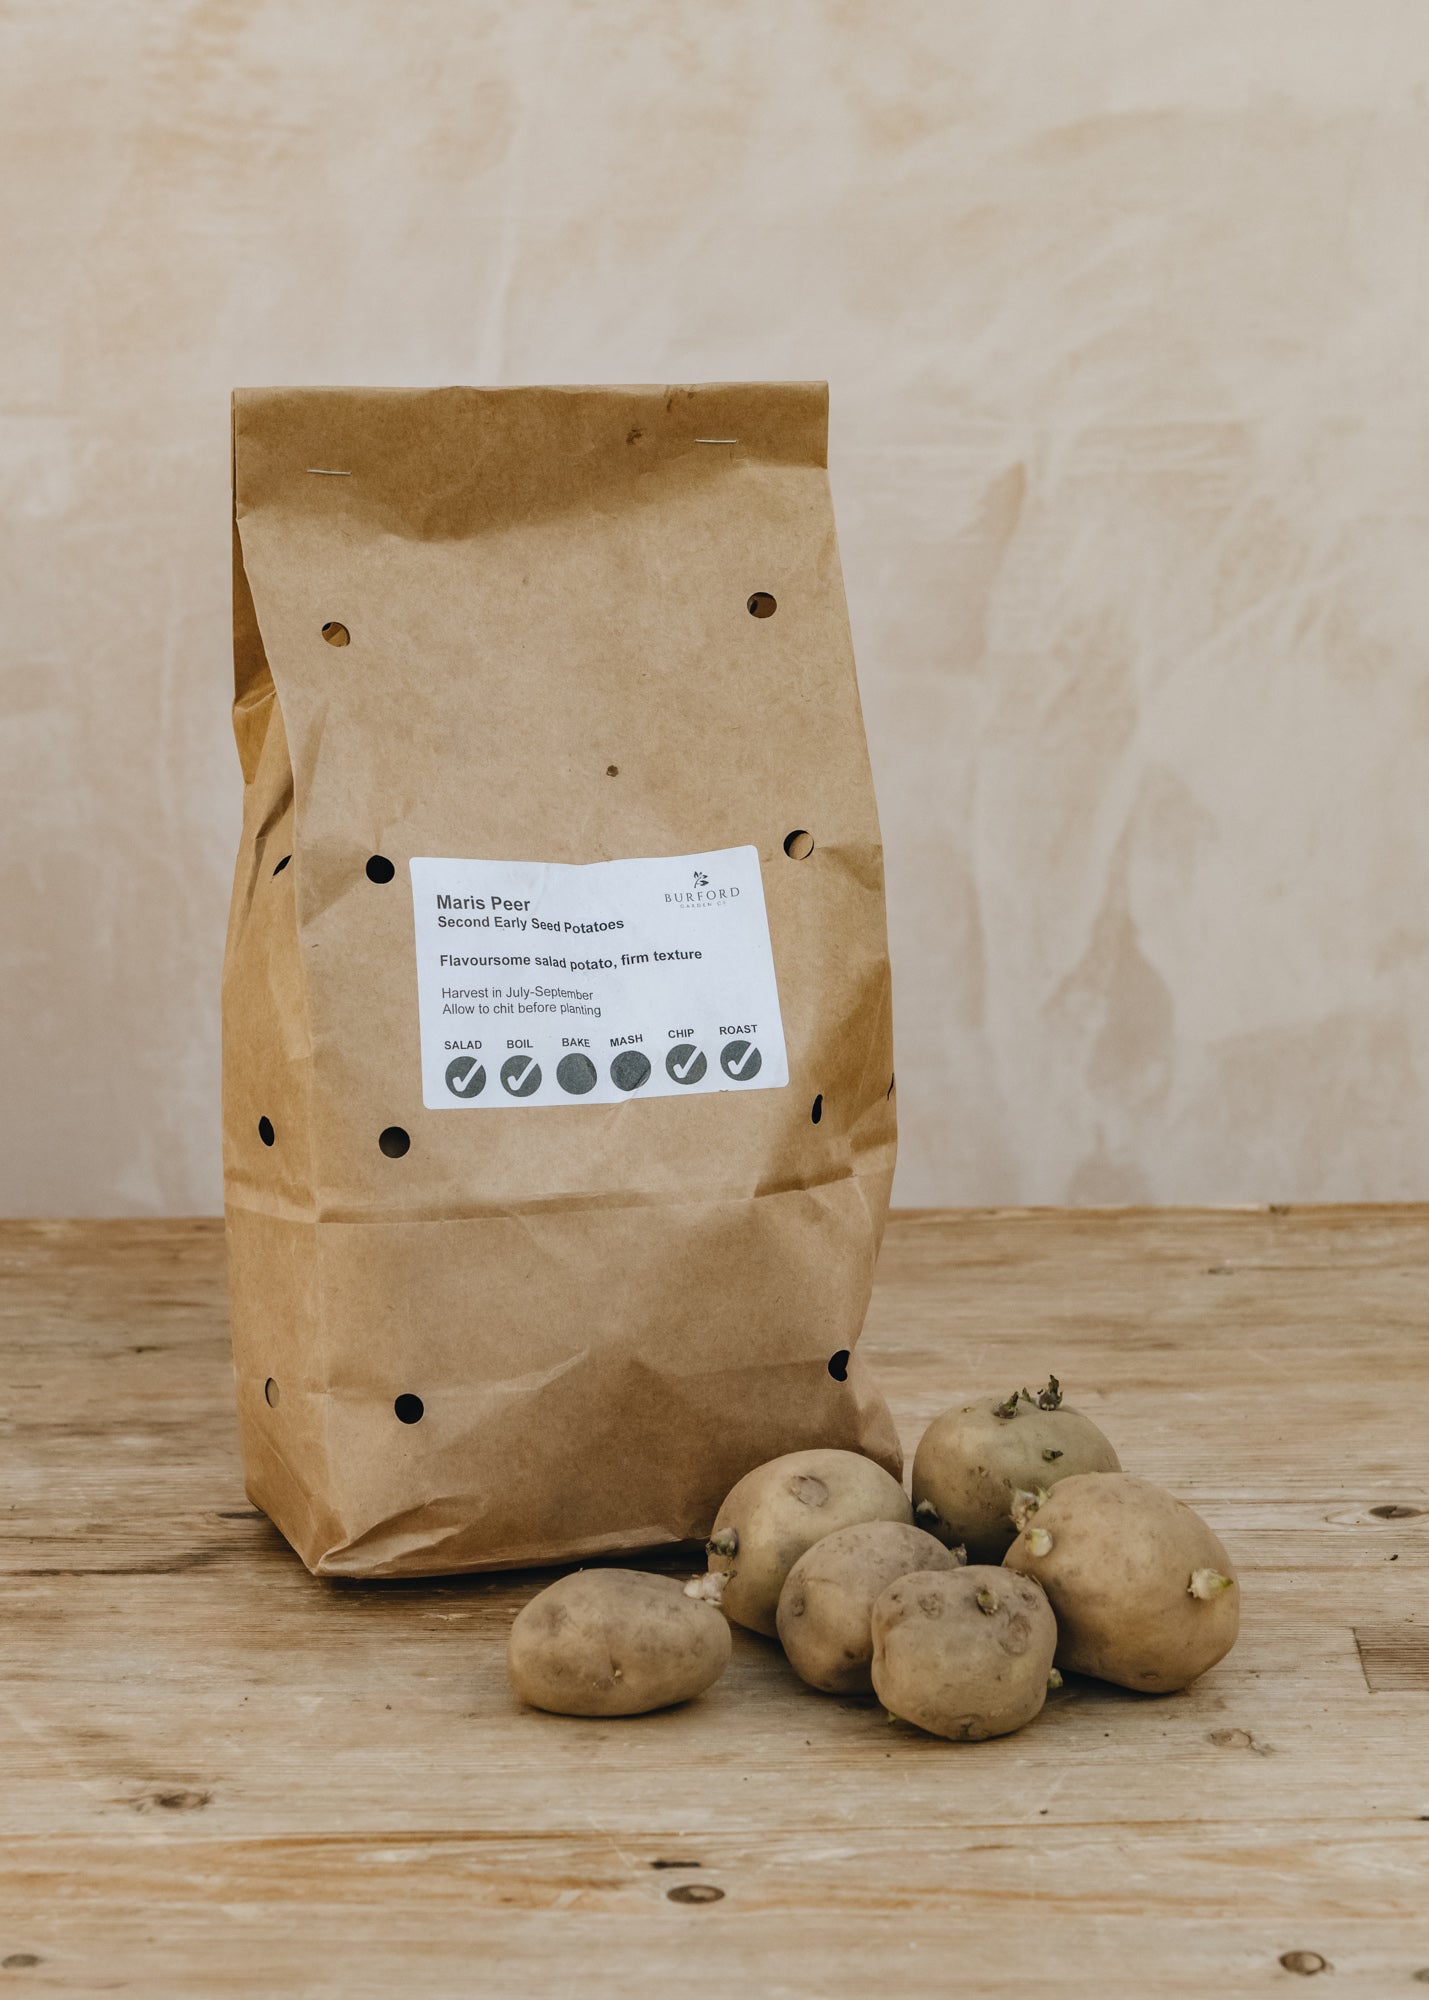 Maris Peer Second Early Seed Potatoes